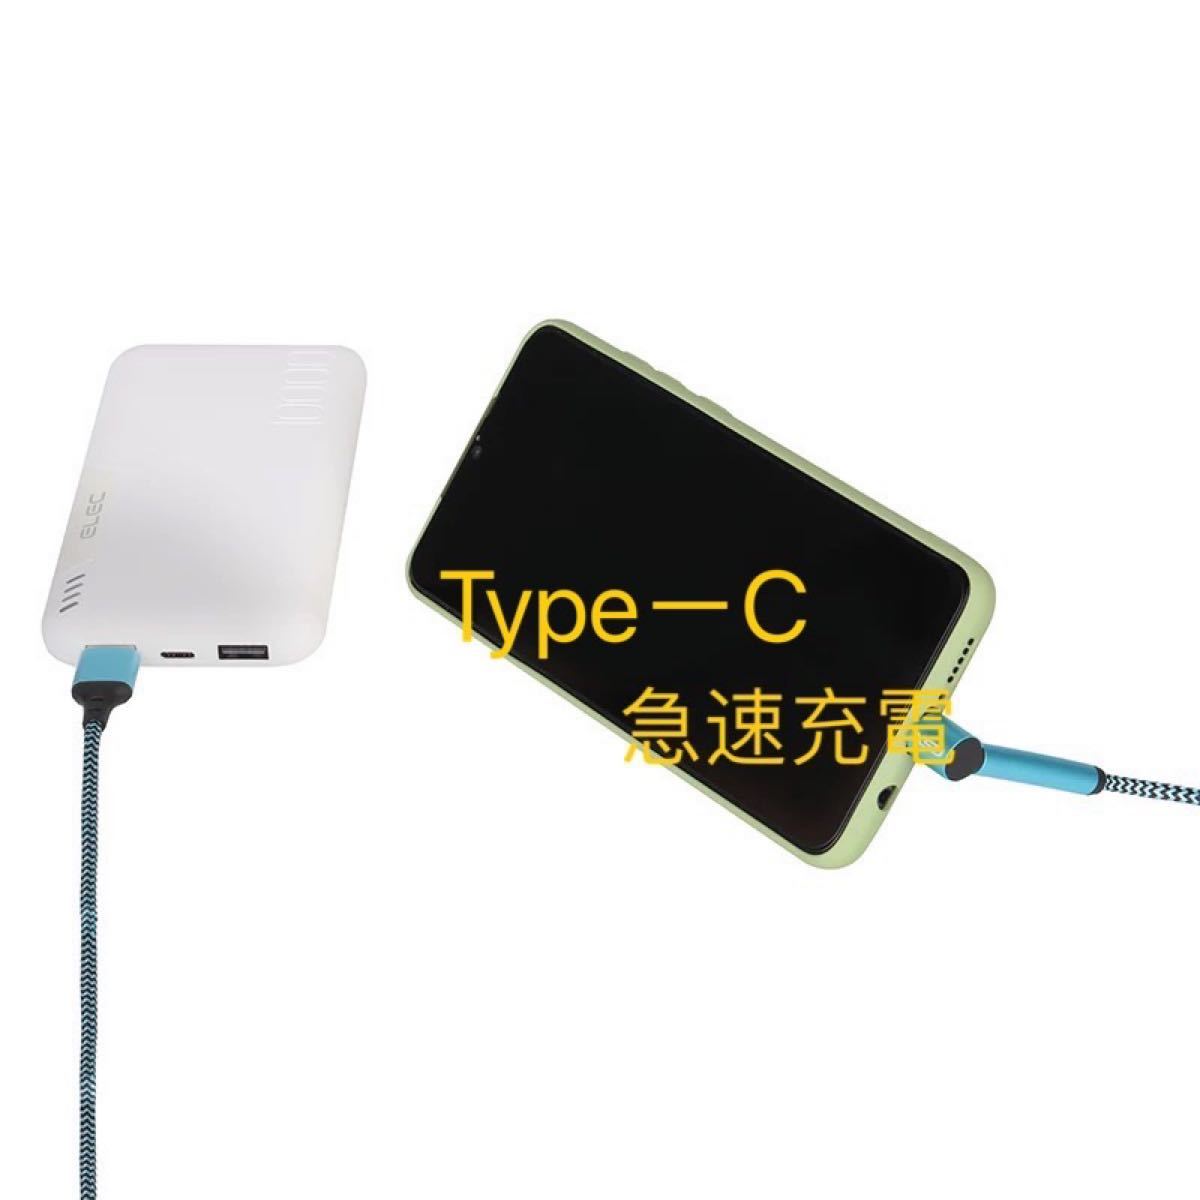 Type C タイプC USB 充電ケーブル 3A 超急速充電